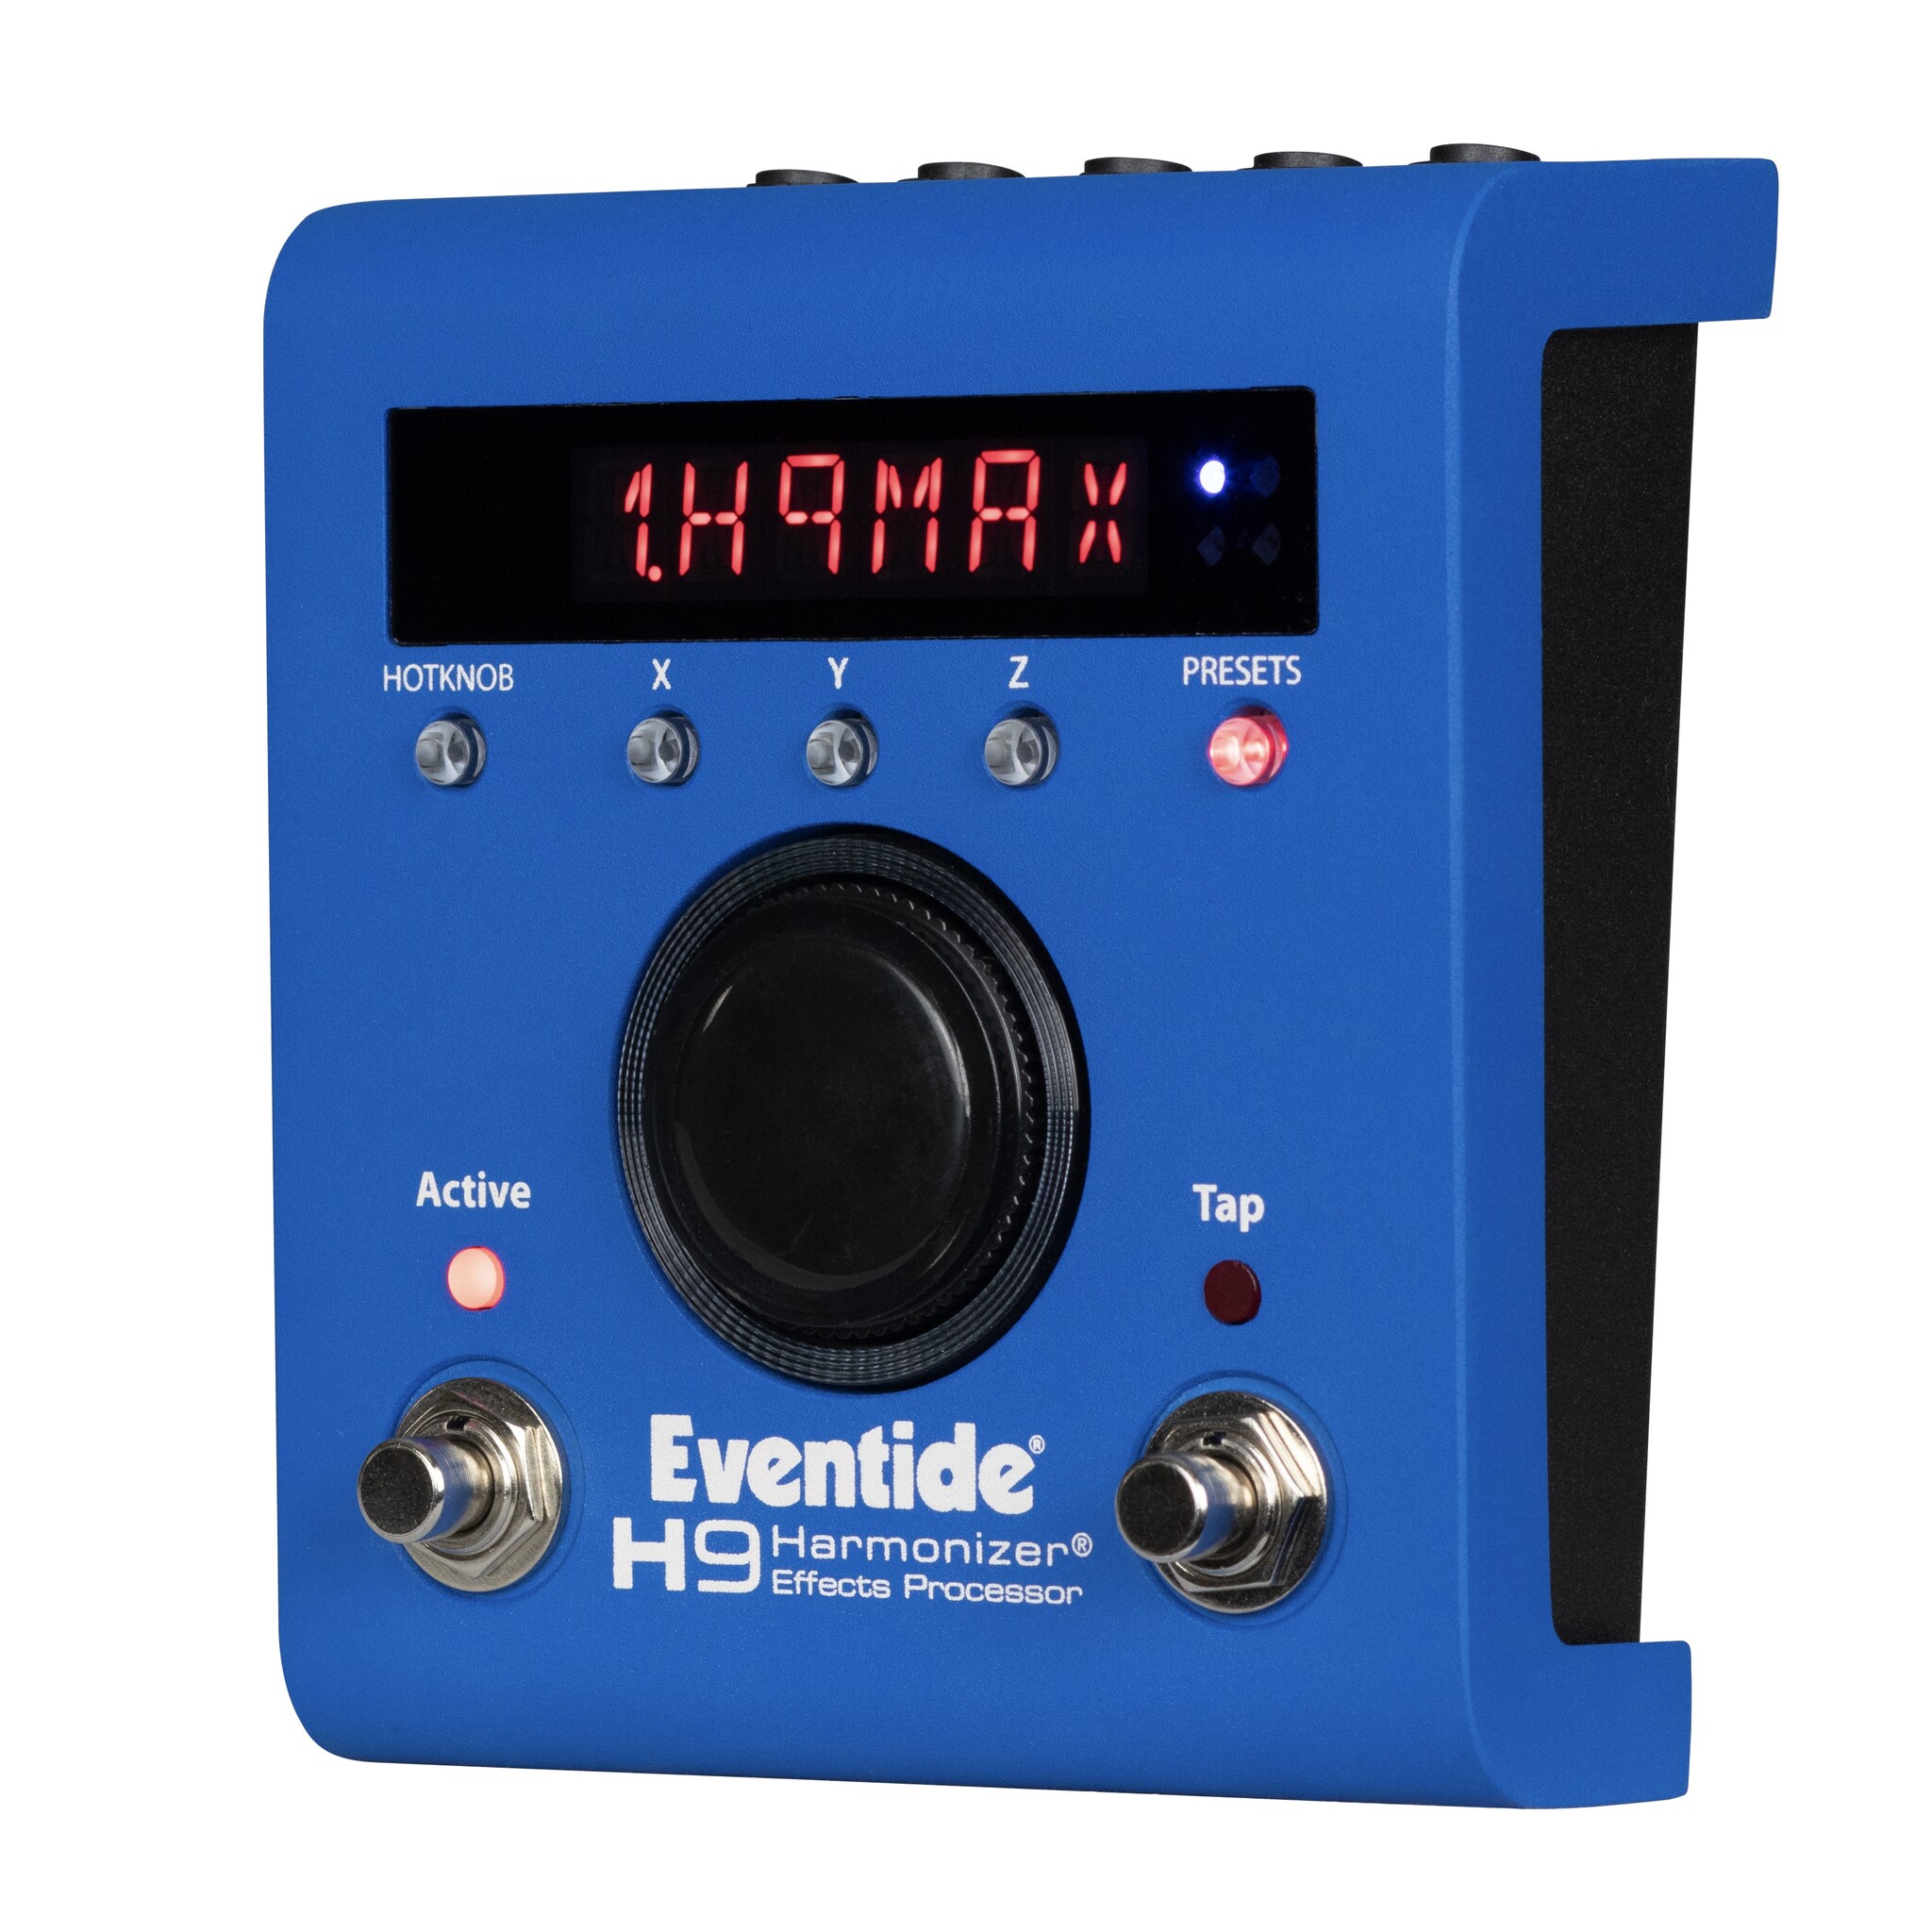 Eventide H9 MAX Harmonizer Effects Processor - Limited Edition Blue